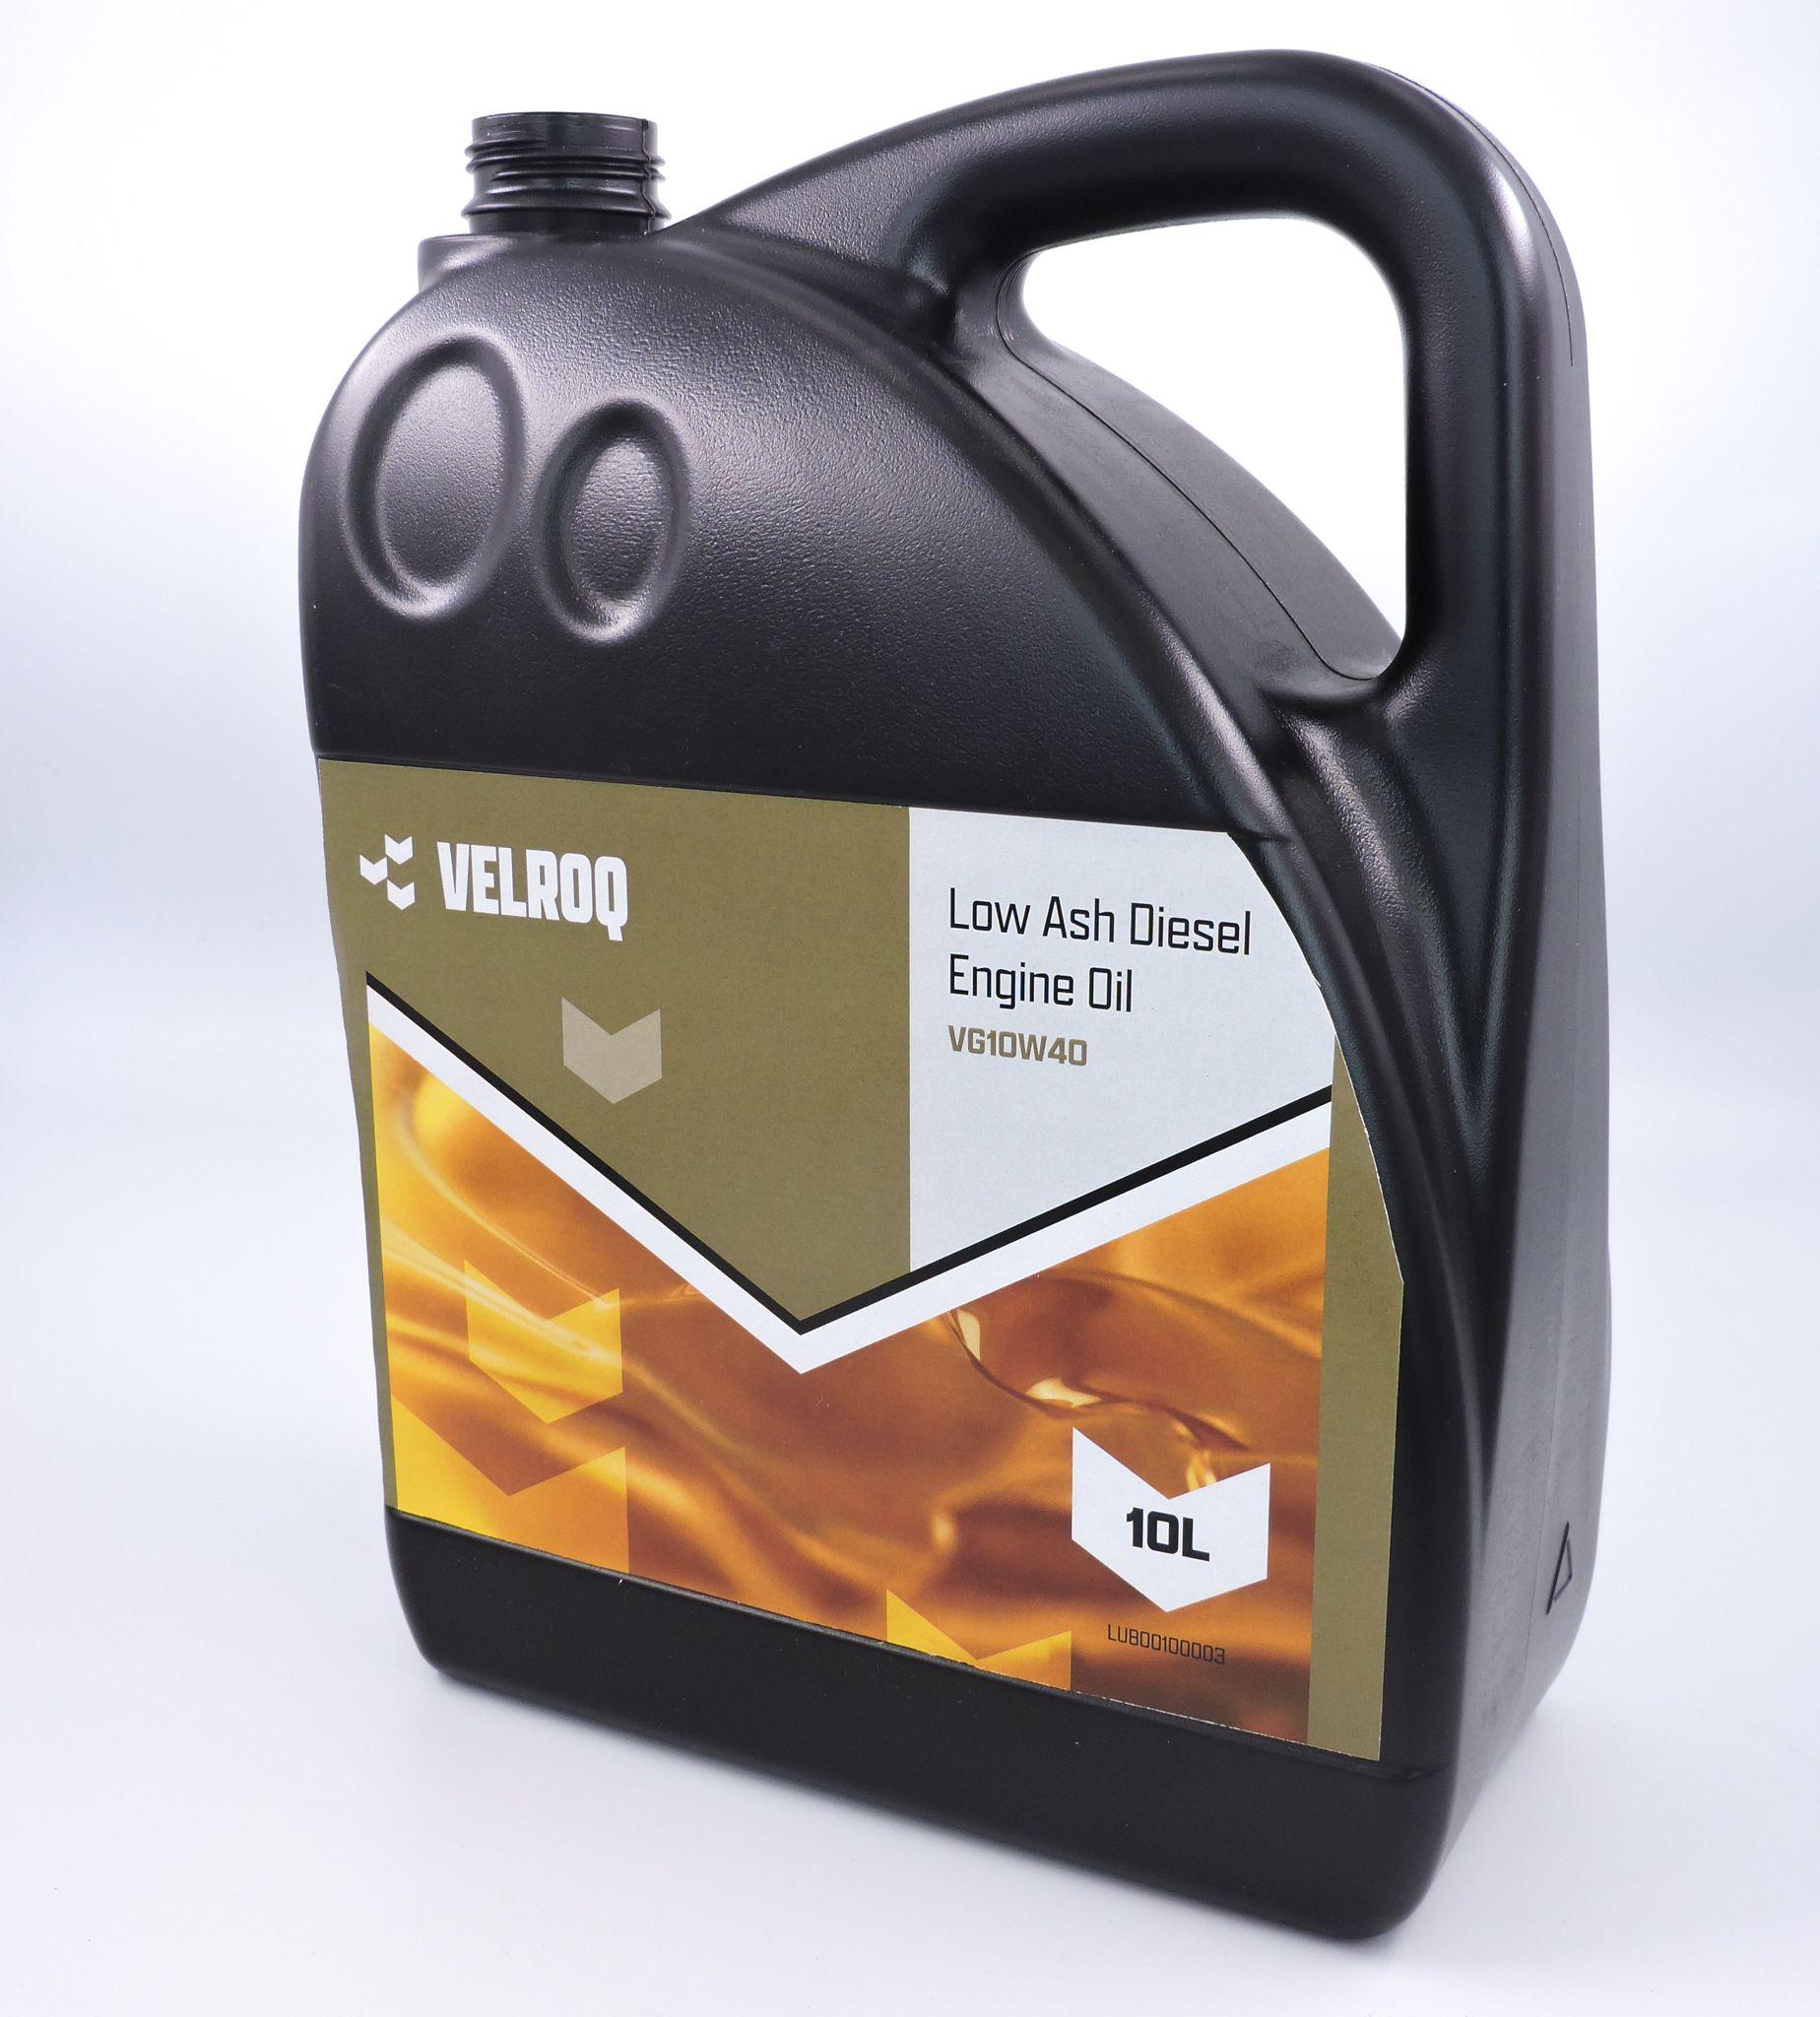 Low Ash Diesel Engine Oil (10l) (Sandvik BG00635977), product image 1